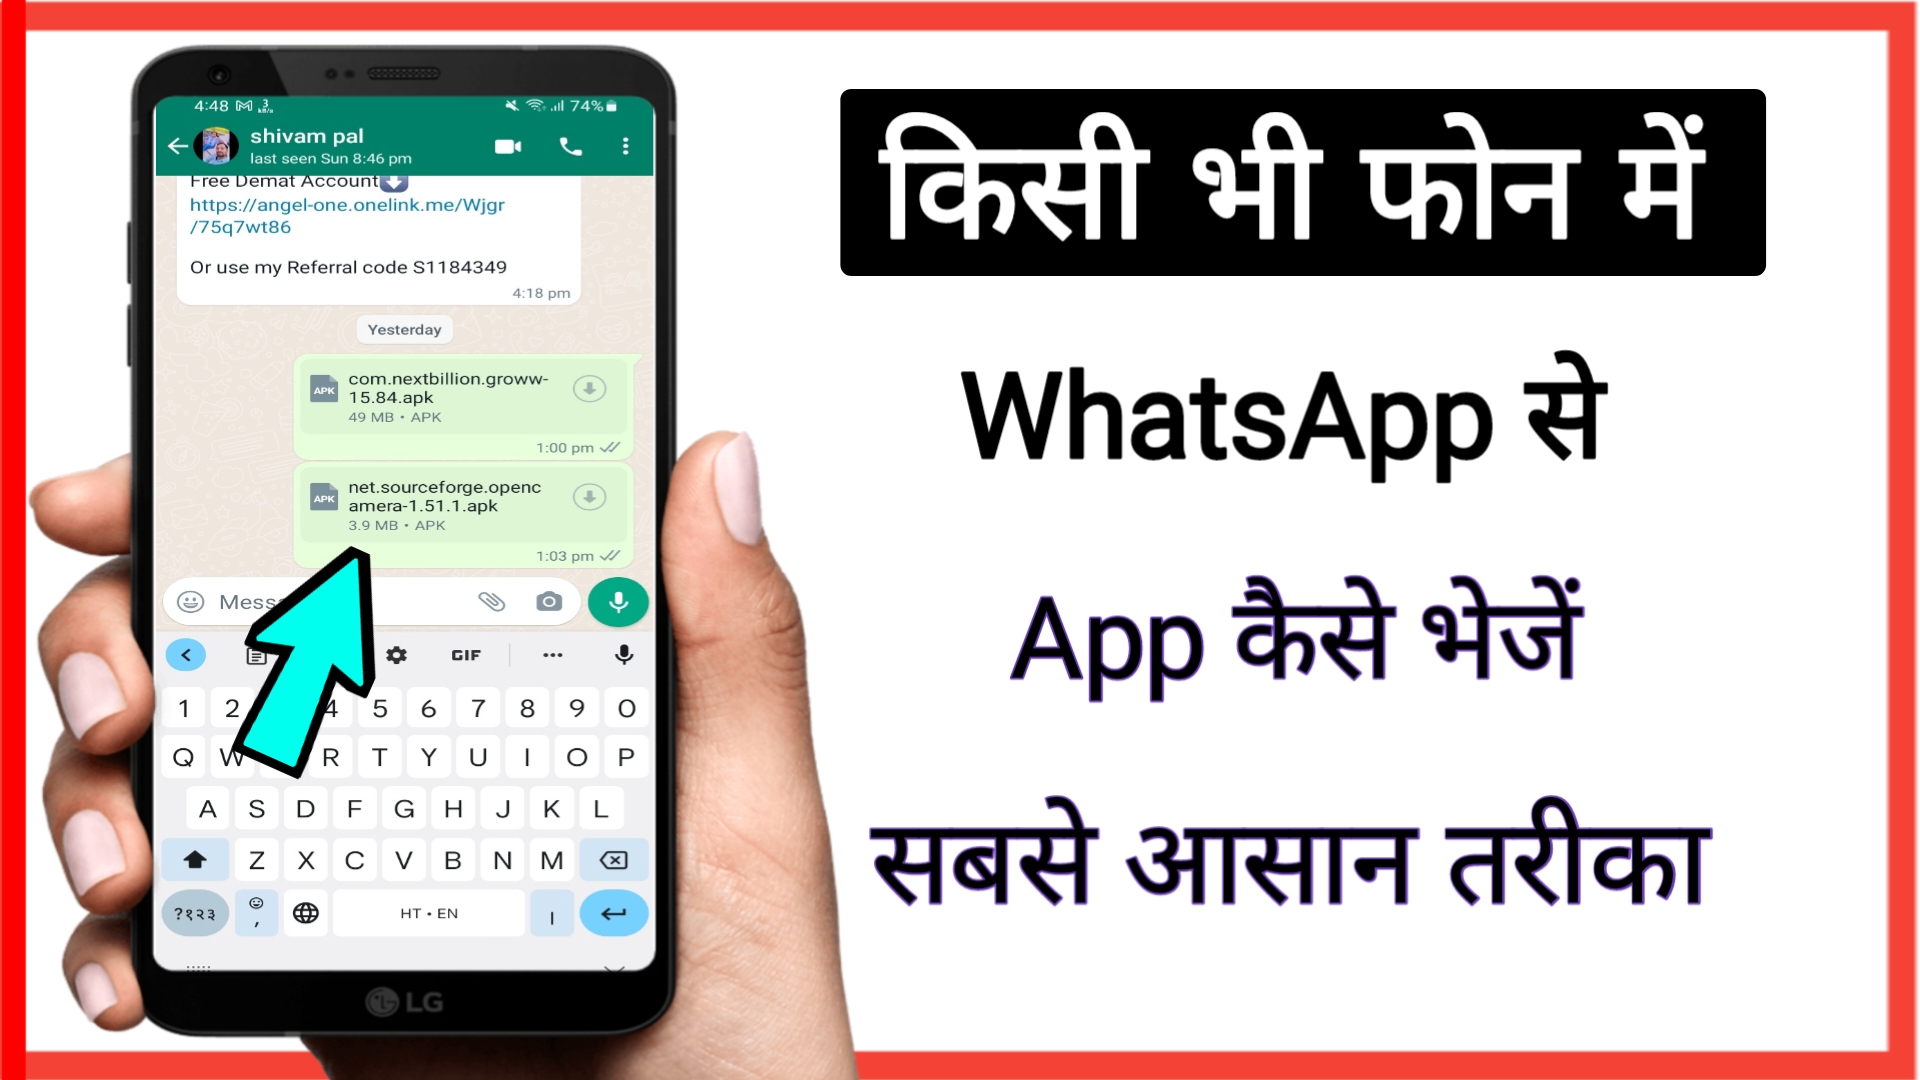 WhatsApp se app kaise bheje